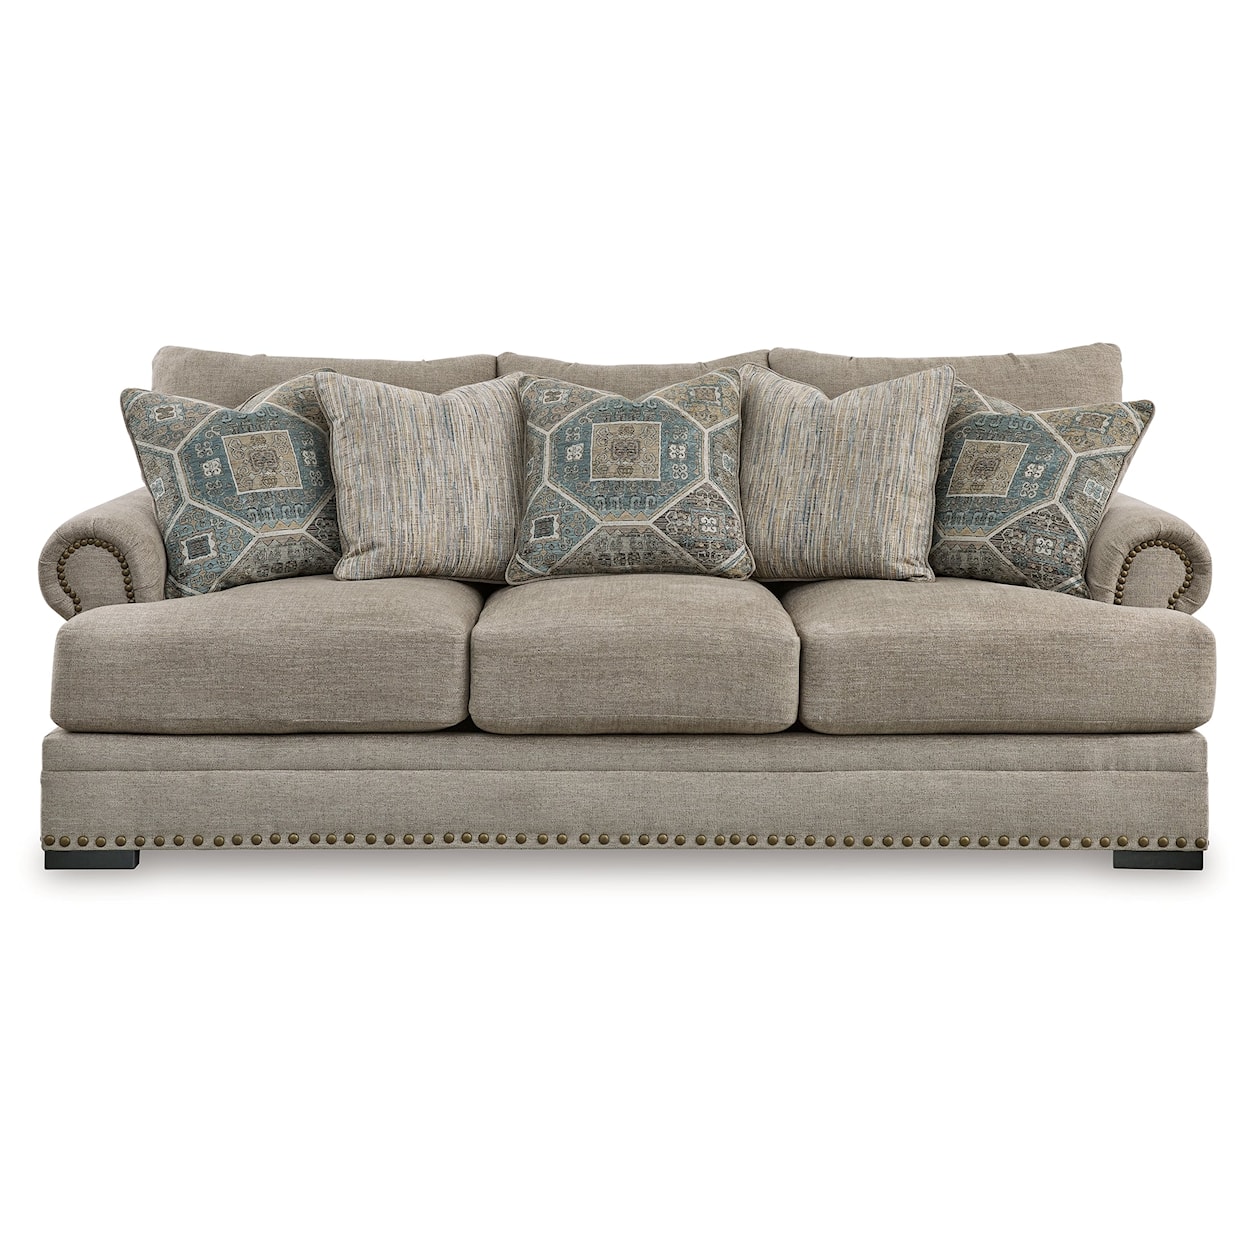 Benchcraft Galemore Sofa